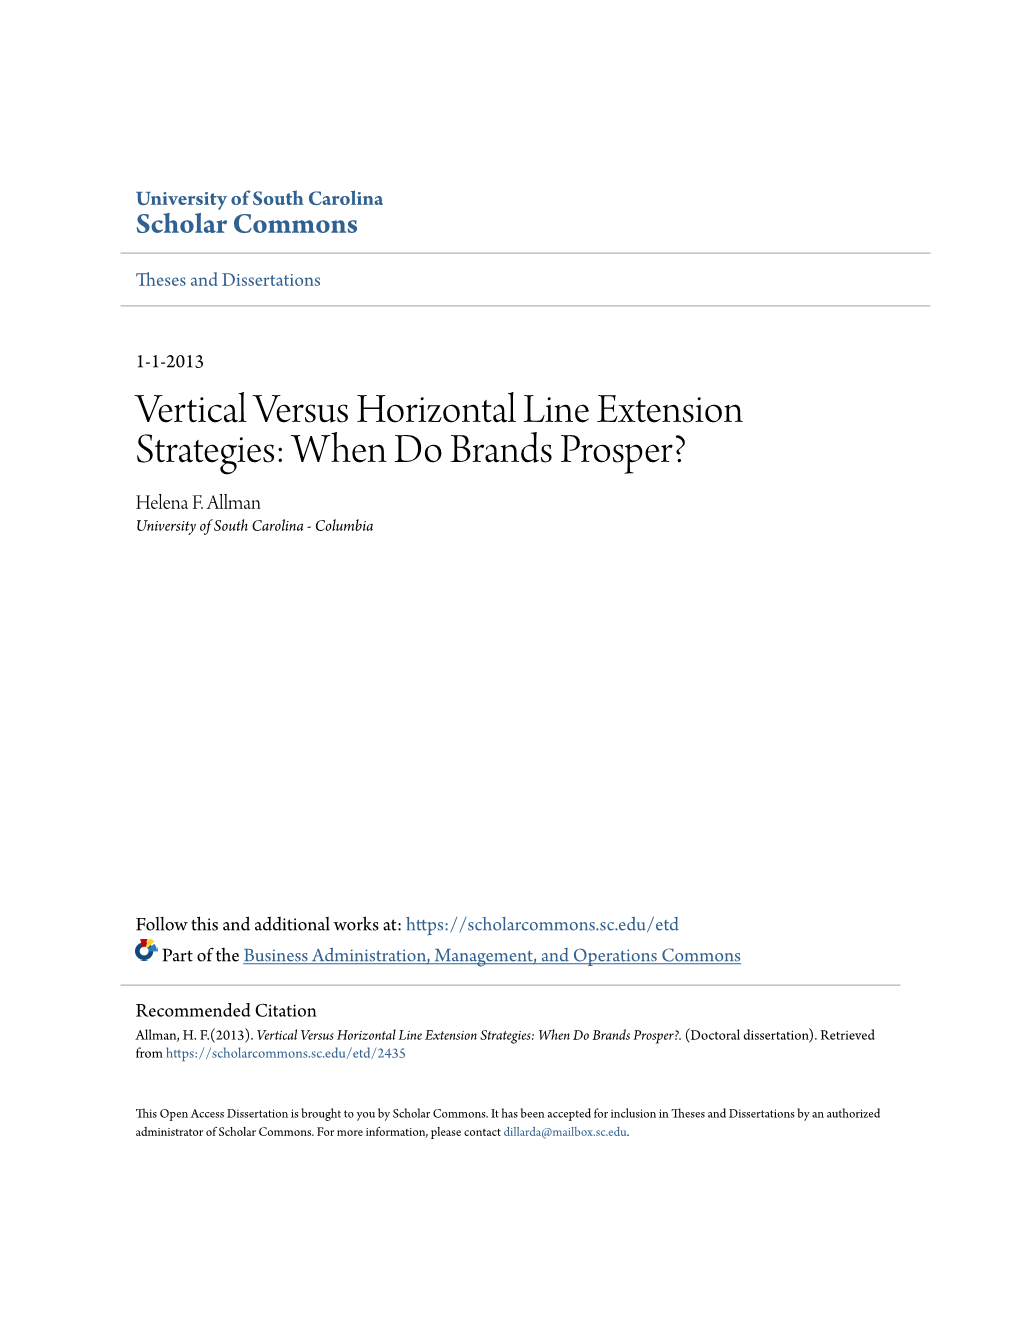 Vertical Versus Horizontal Line Extension Strategies: When Do Brands Prosper? Helena F